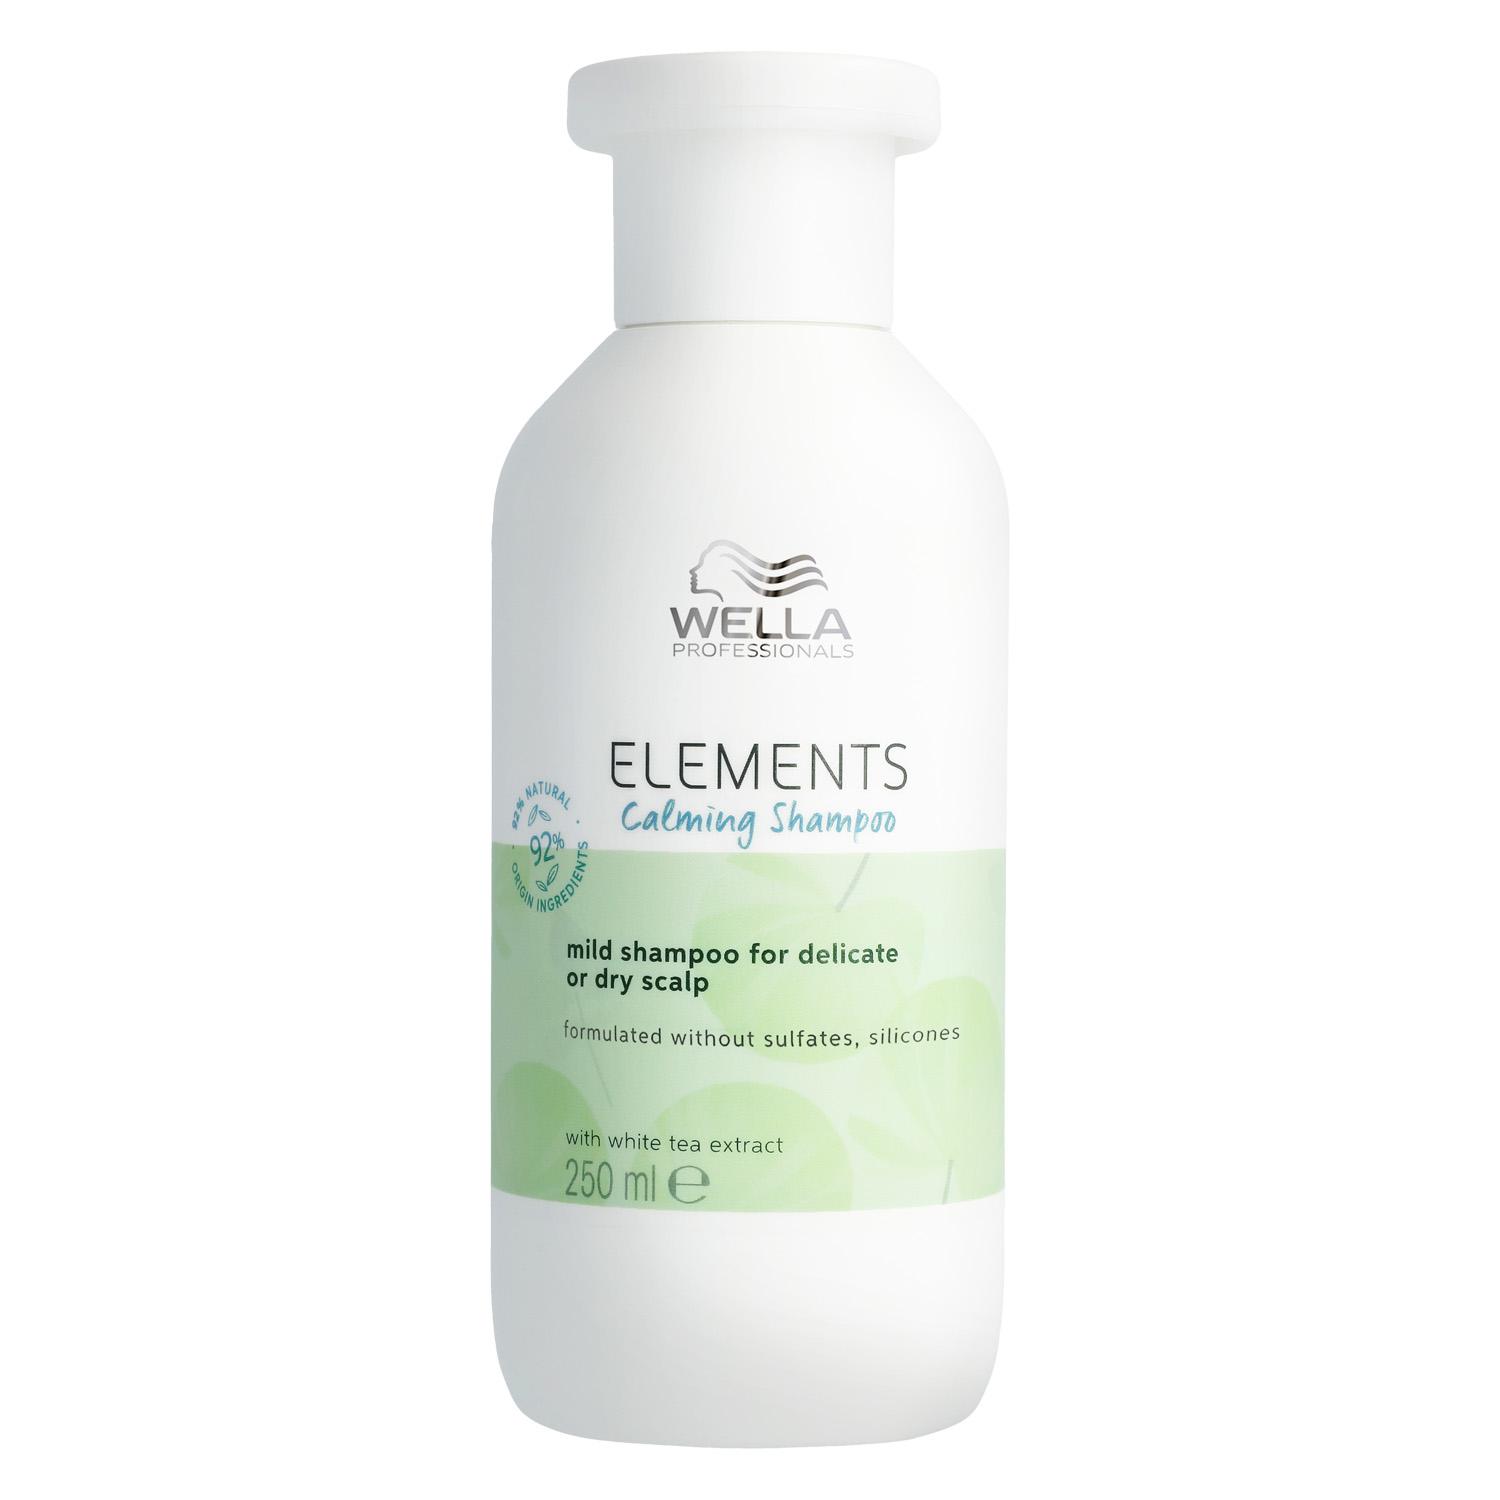 Elements - Calming Shampoo